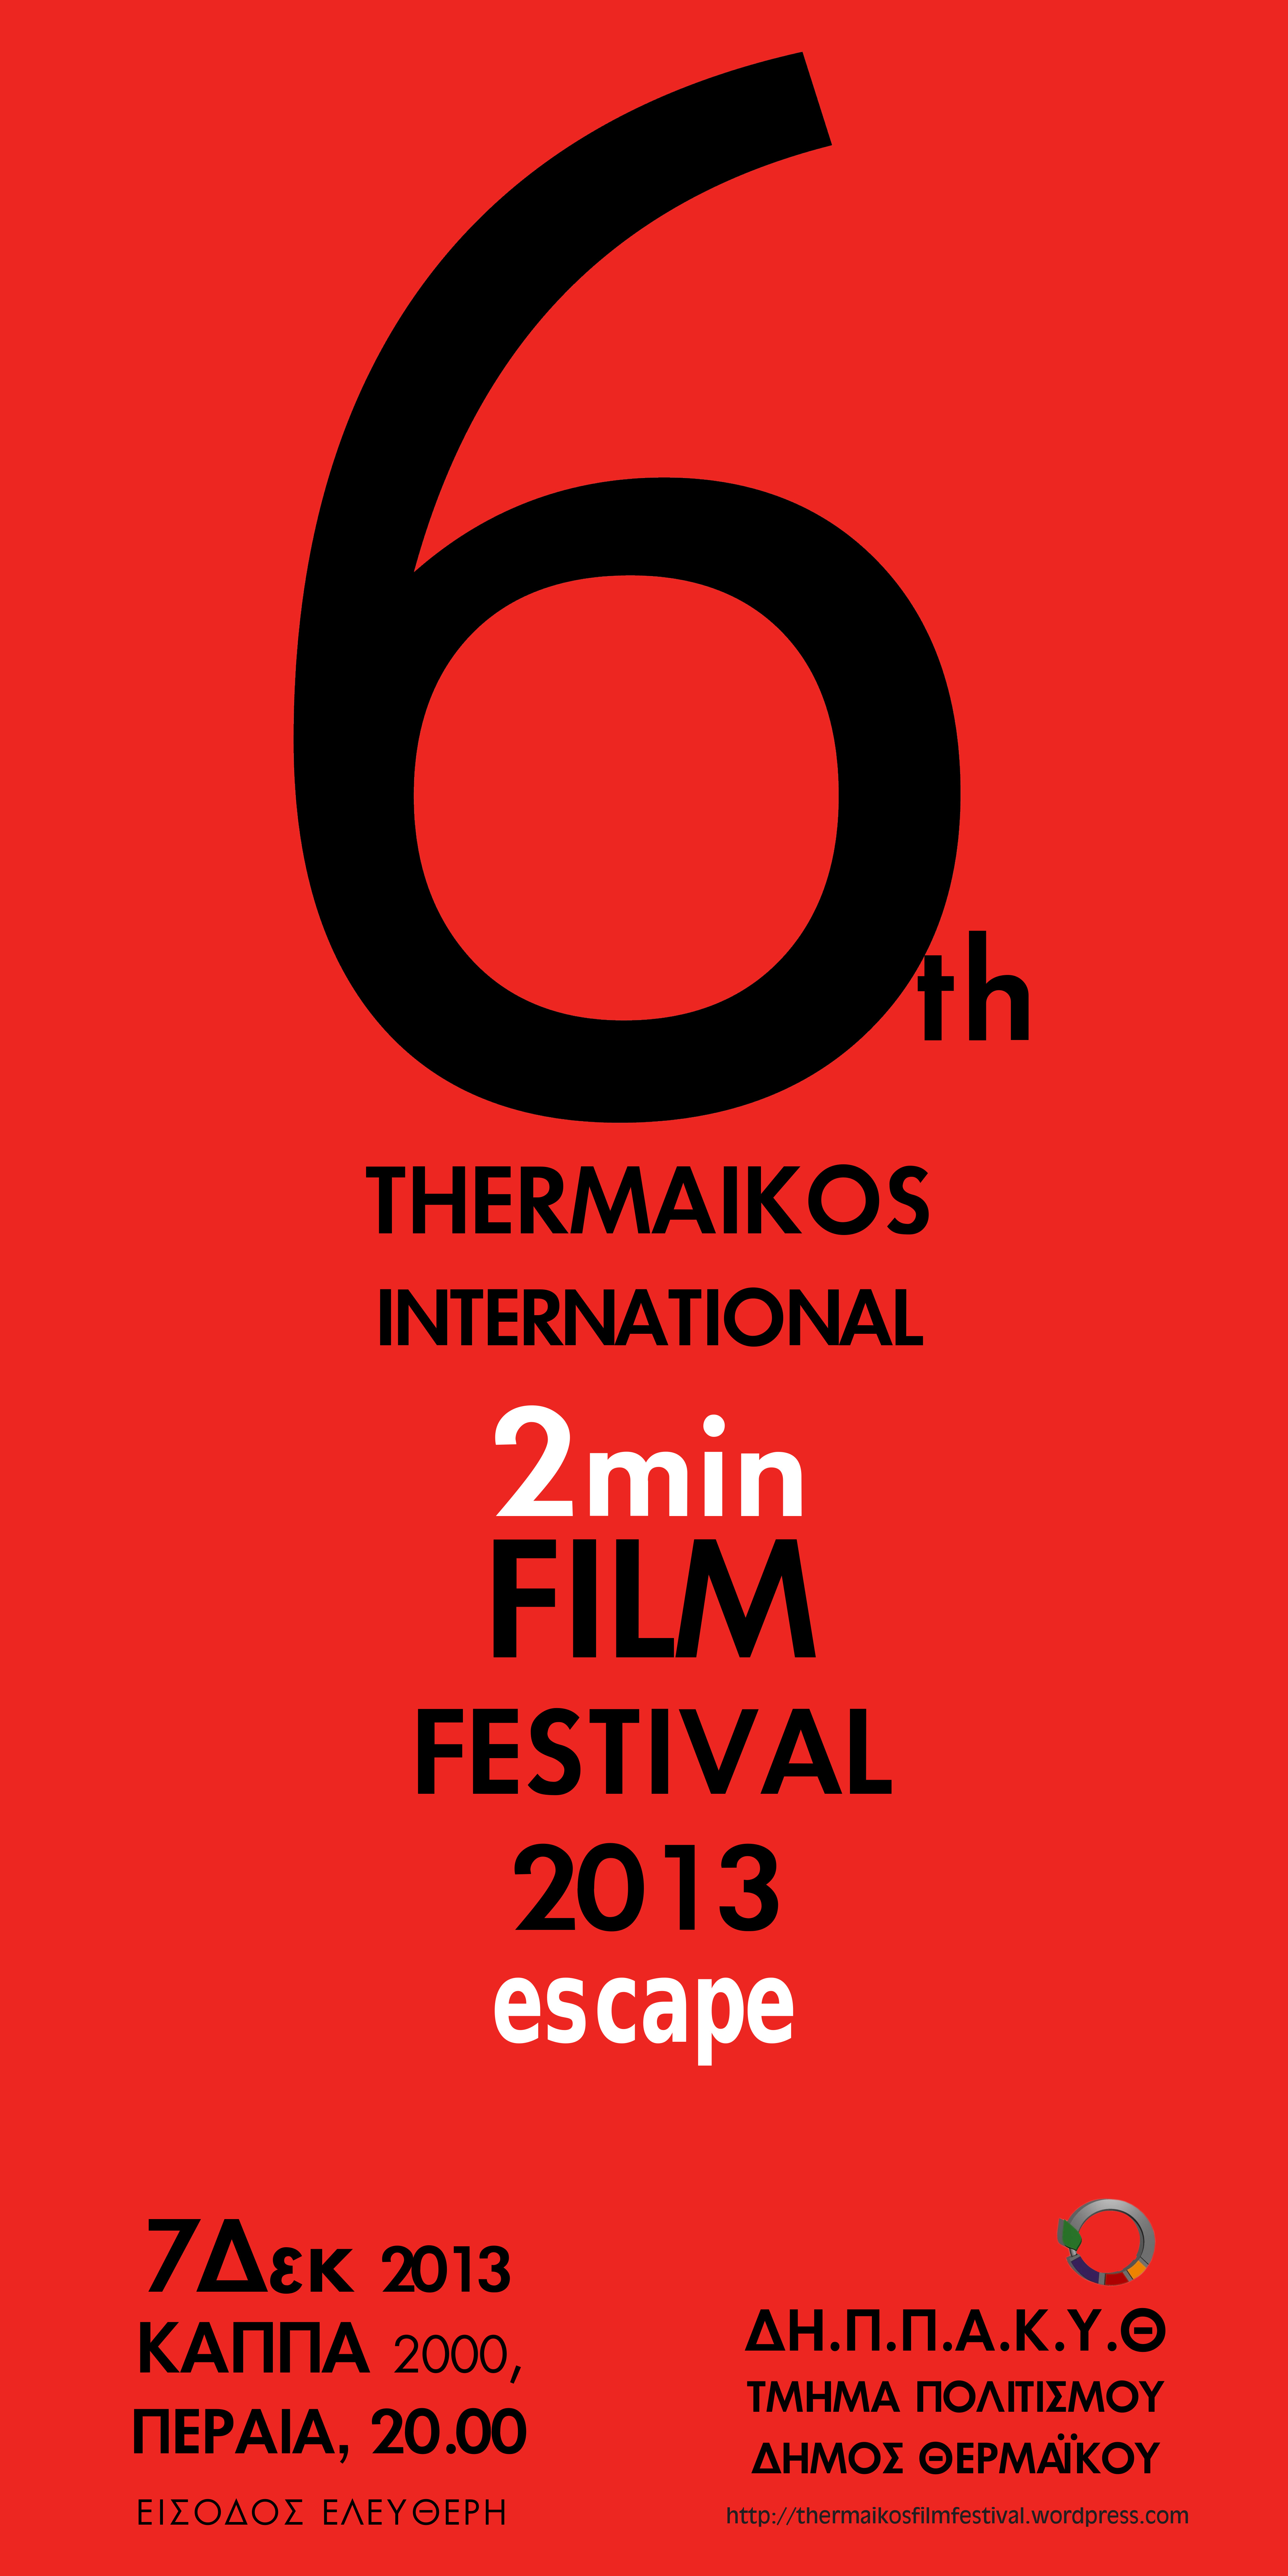 (c) Thermaikosfilmfestival.wordpress.com